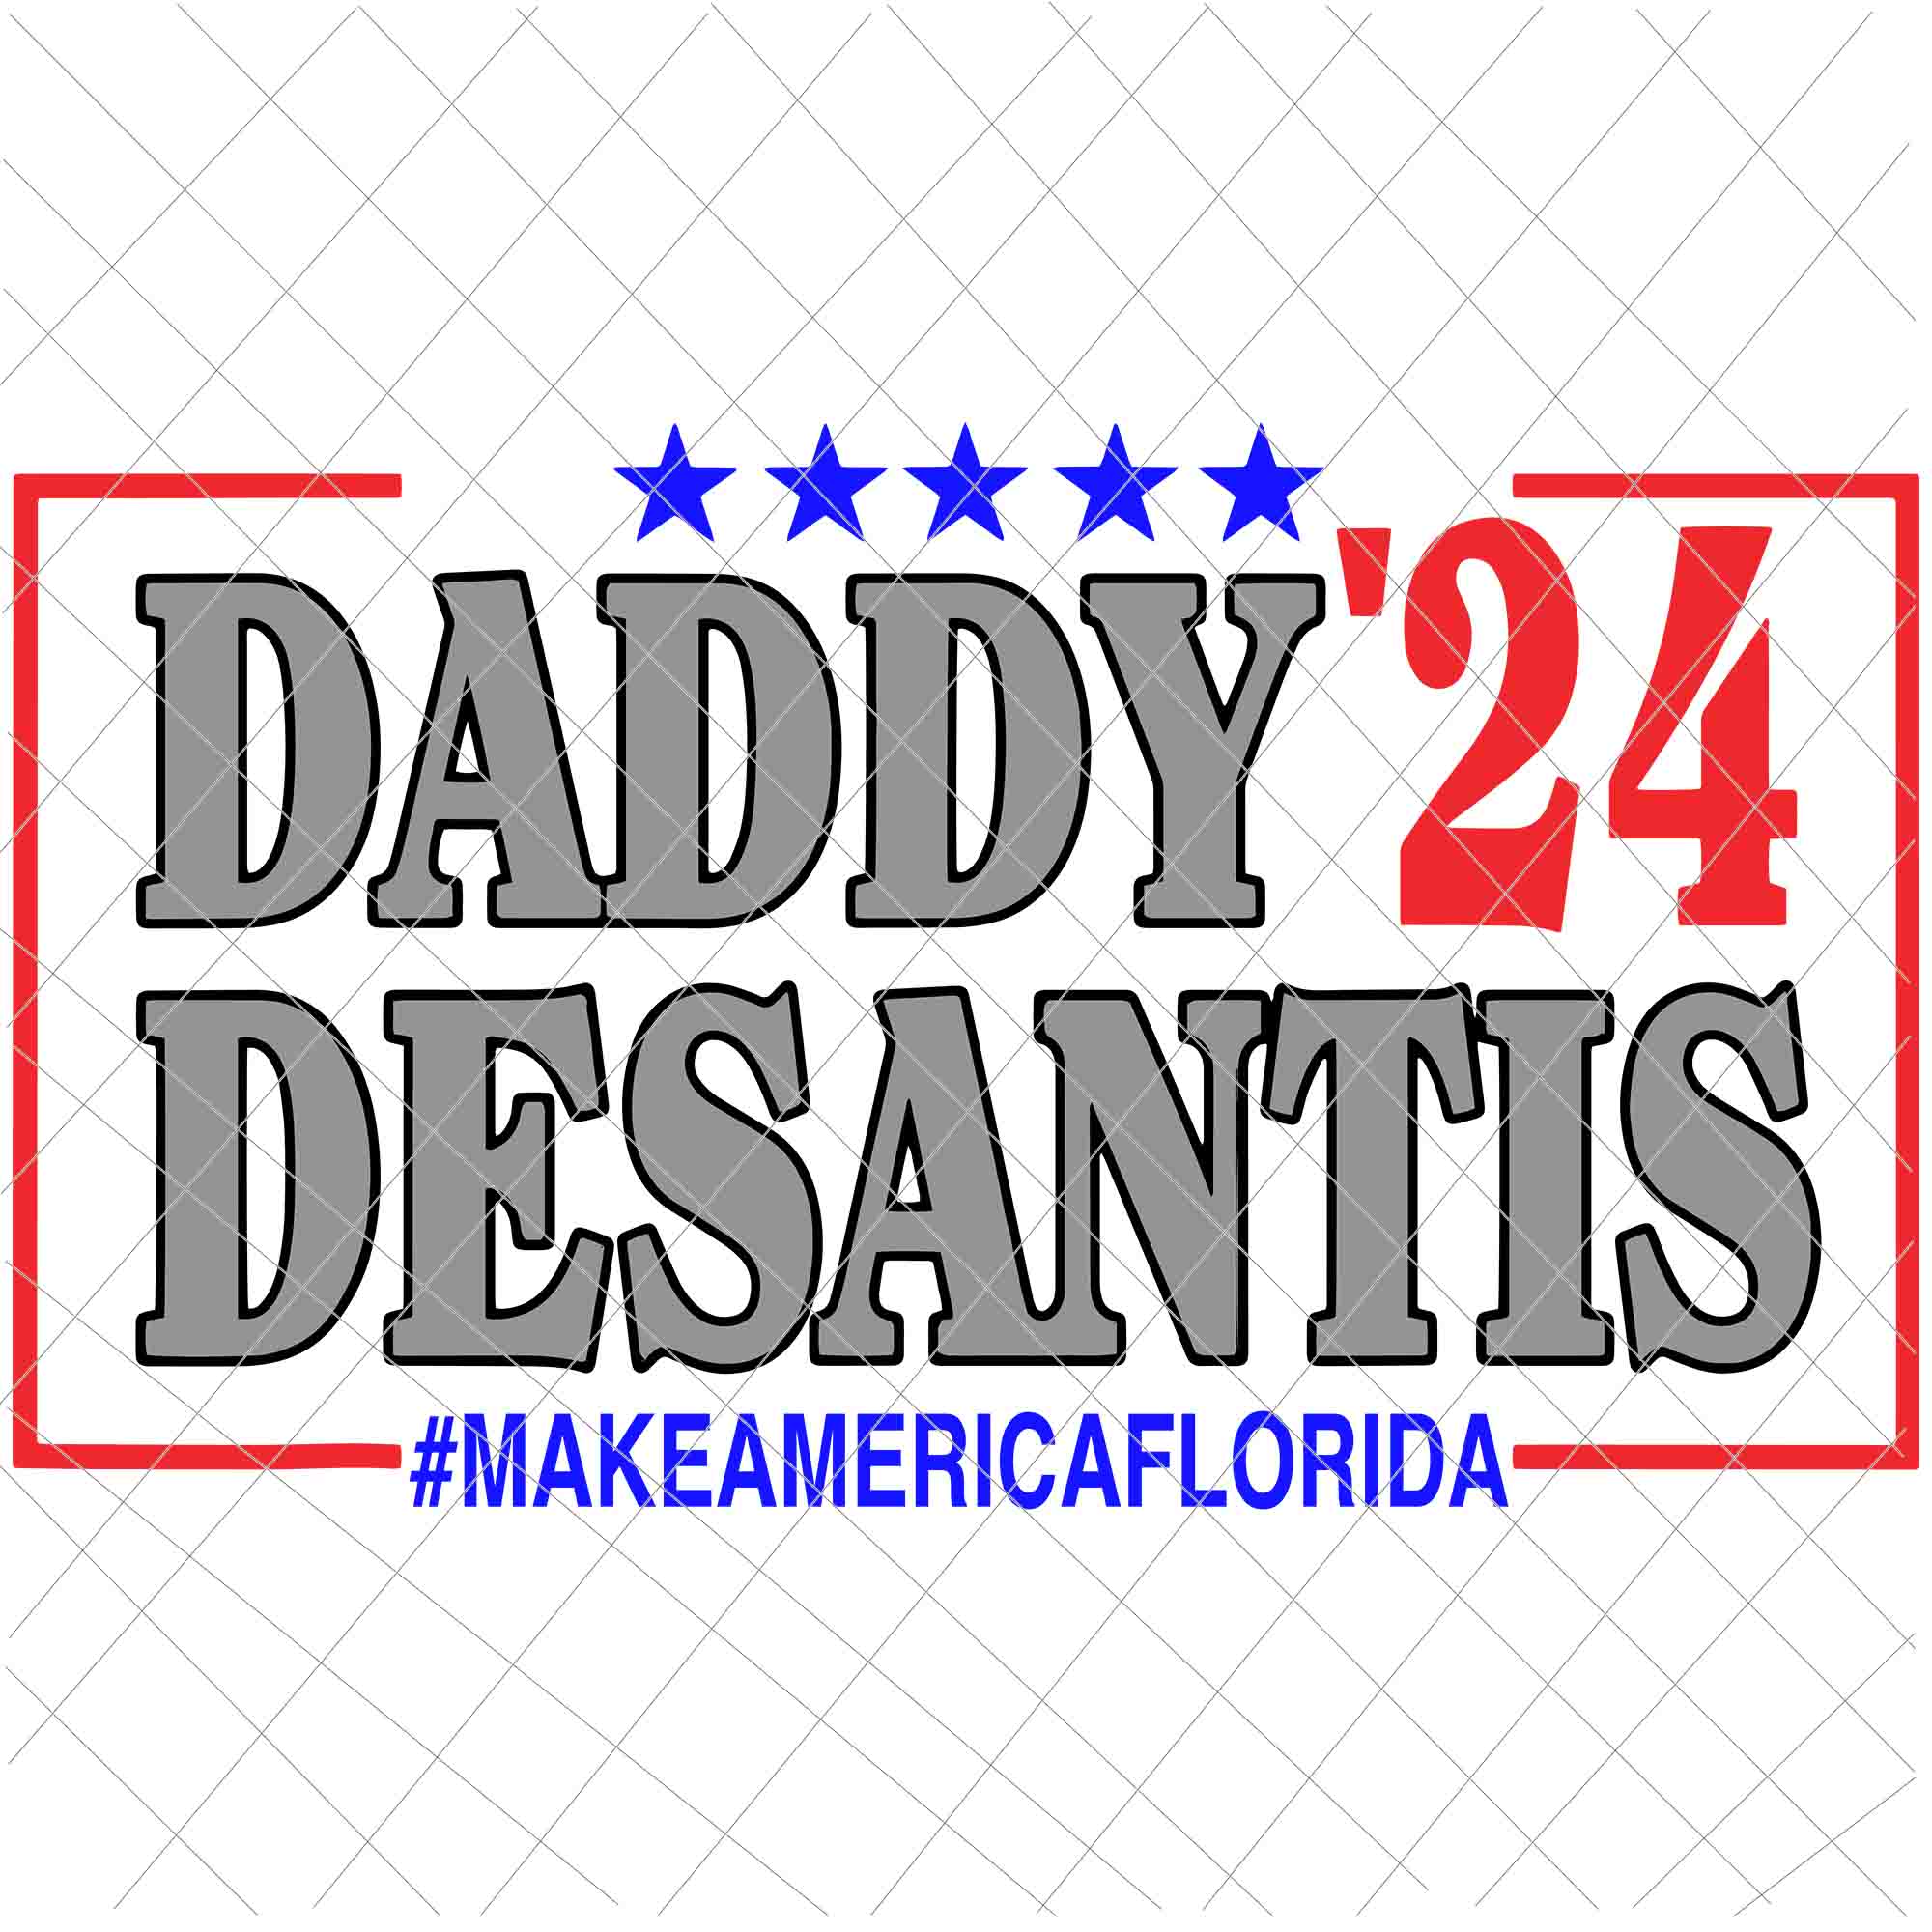 Daddy 2024 Desantis Make America Florida Svg